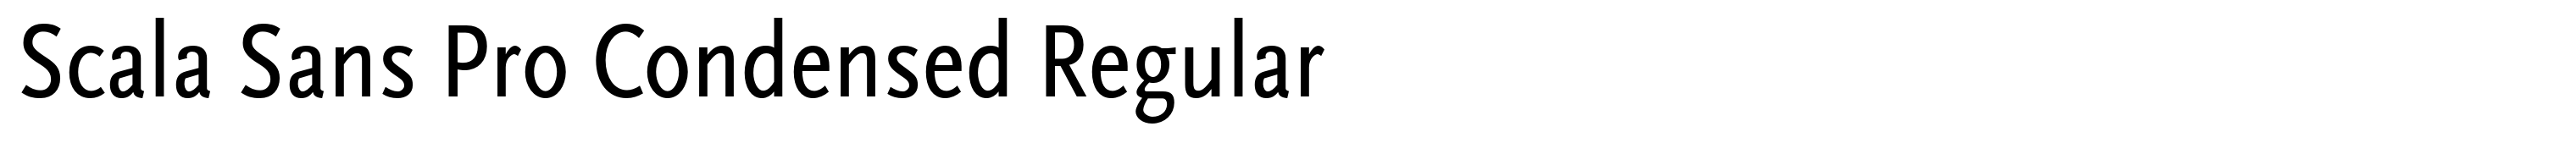 Scala Sans Pro Condensed Regular